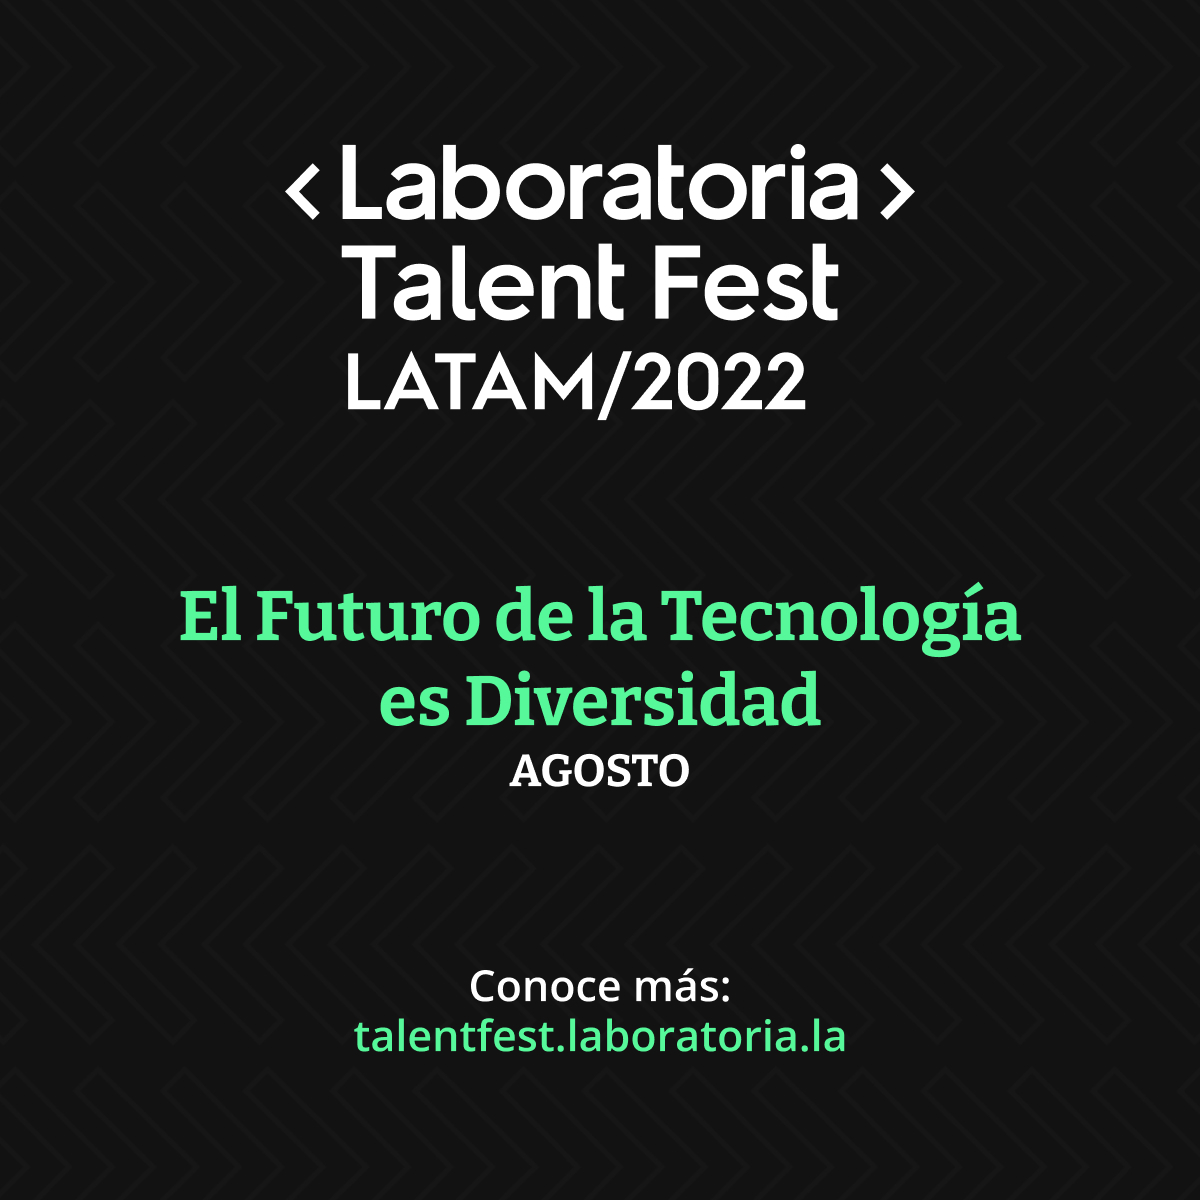 Talent Fest Latam